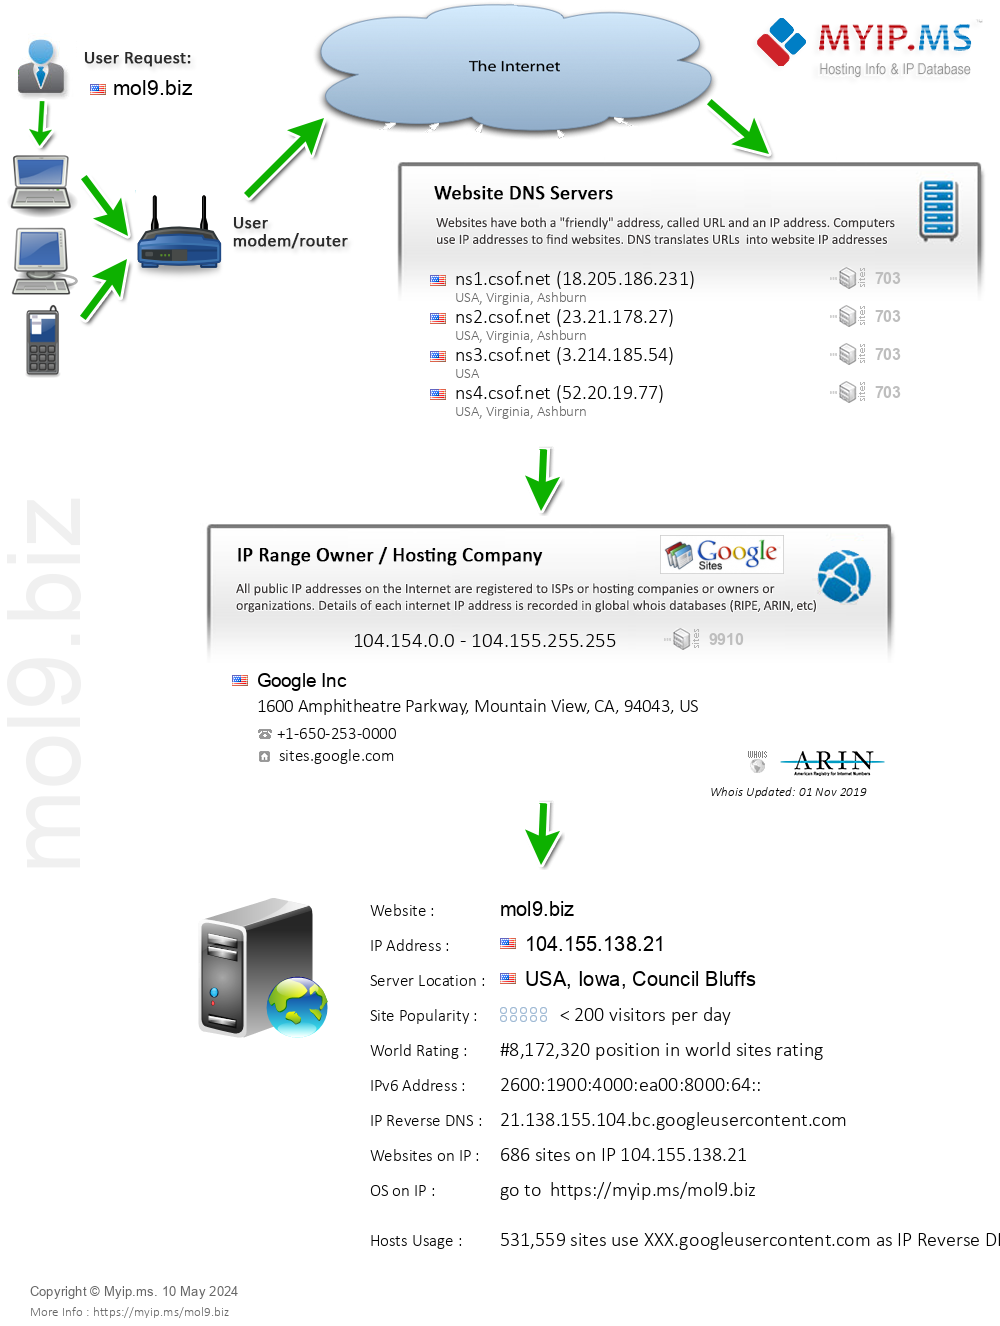 Mol9.biz - Website Hosting Visual IP Diagram